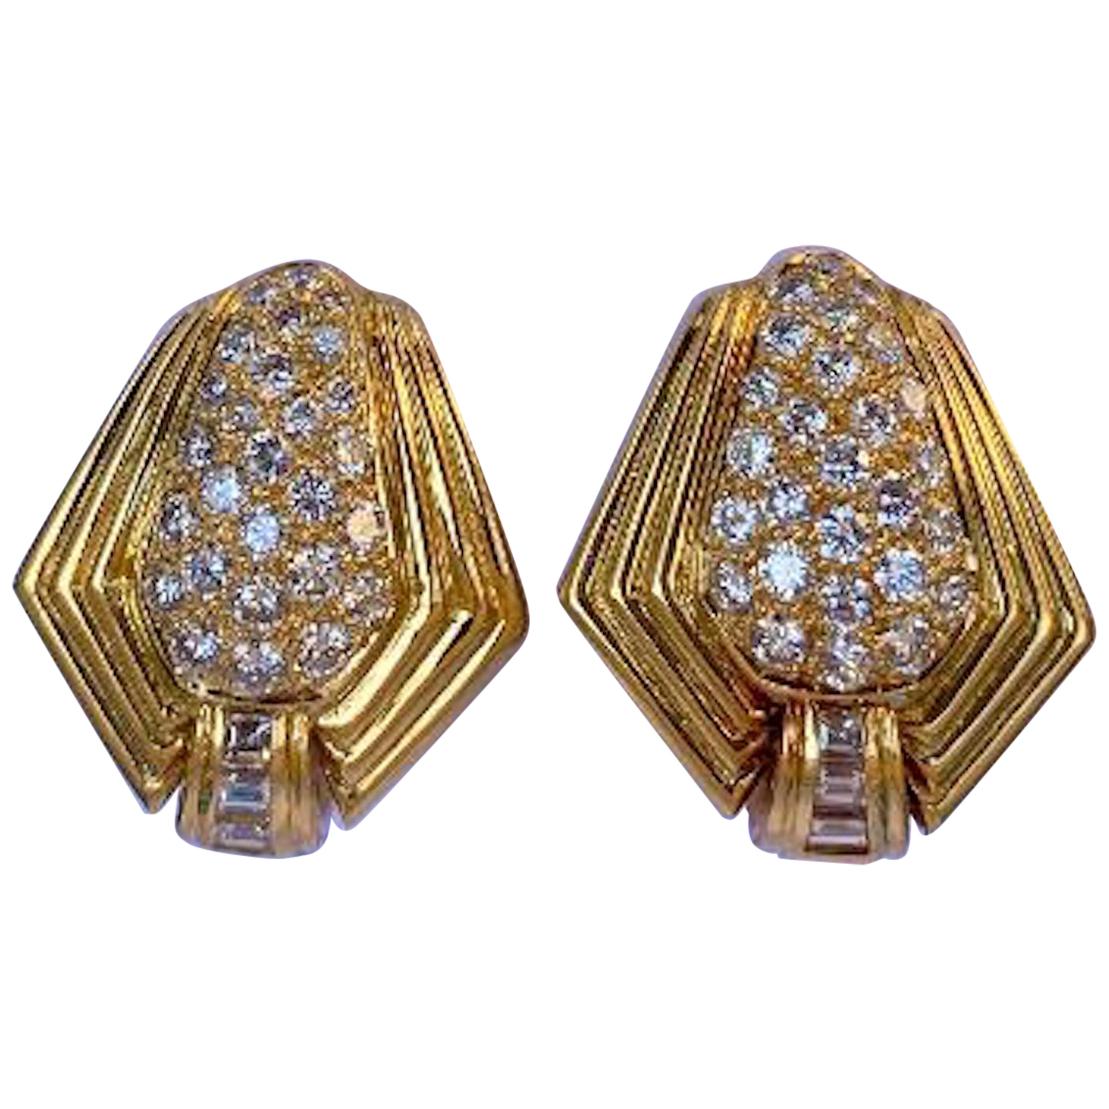 Art Deco Style 6.5 Carat VVS1 F Color Diamond Earrings in 18 Karat Yellow Gold